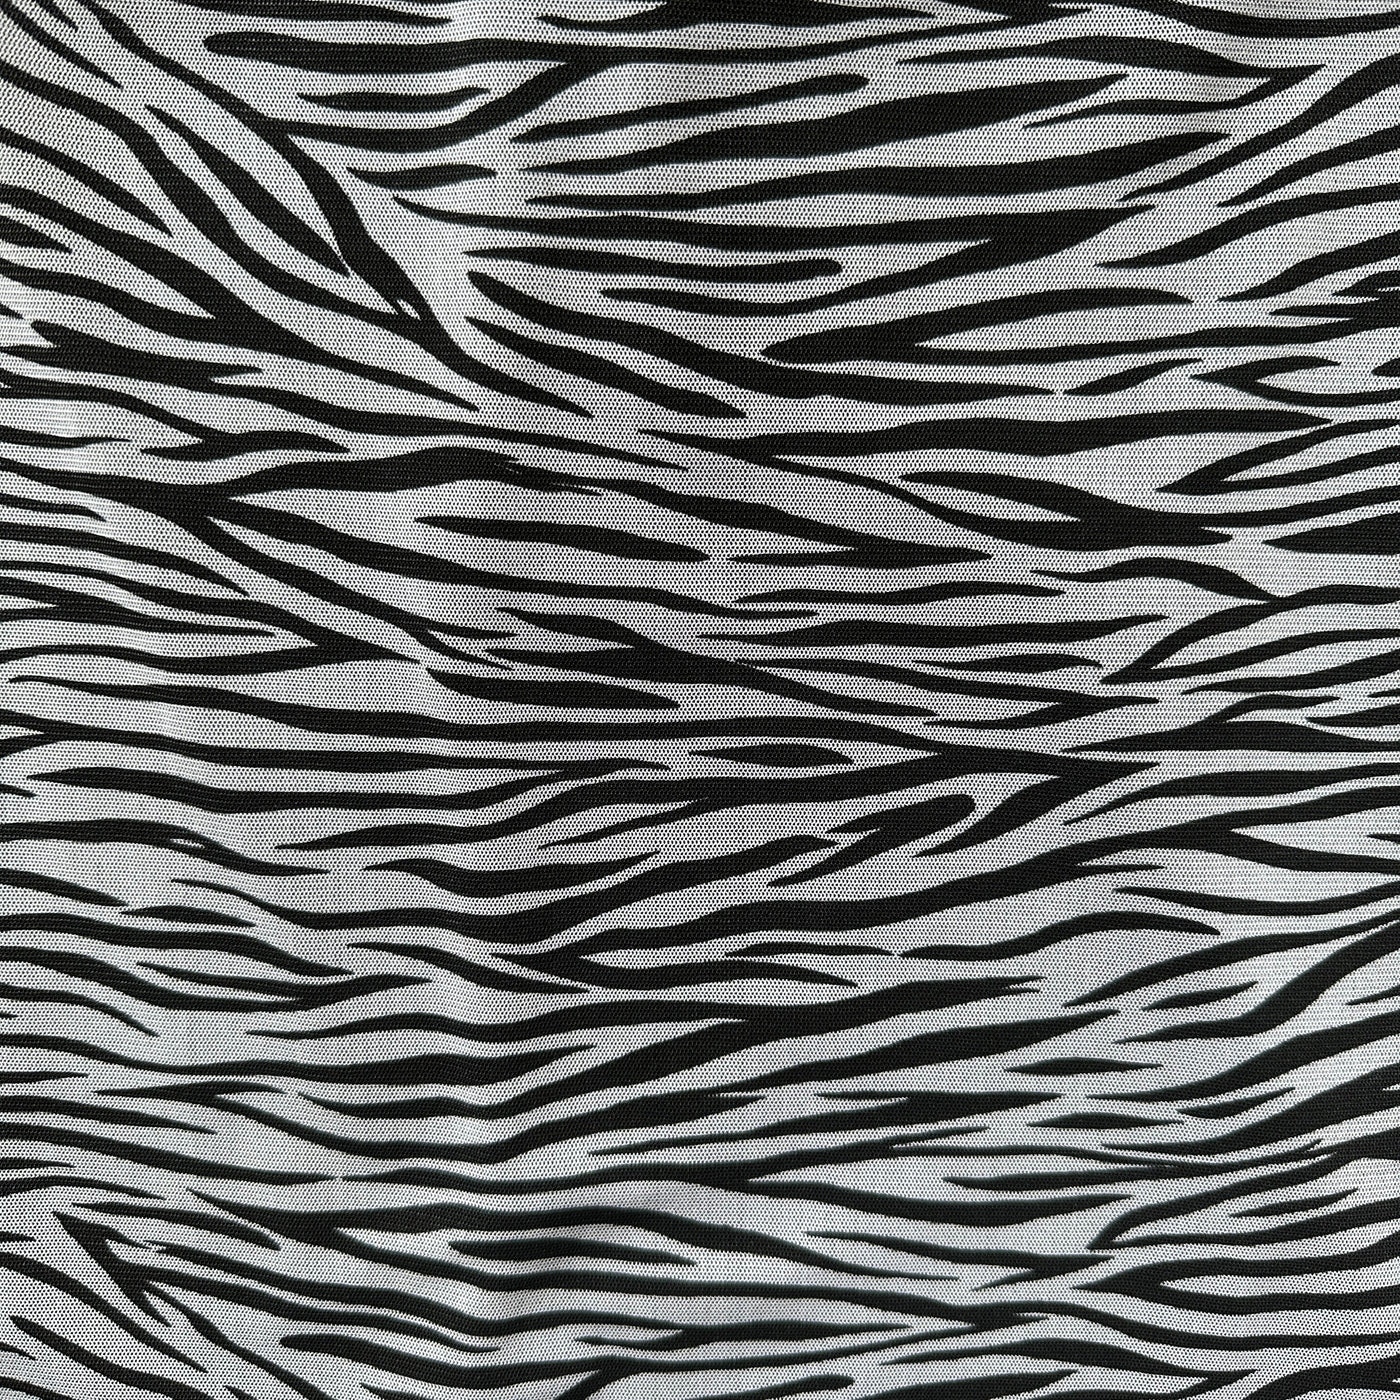 90s Zebra Print “A’gaci Too” Skirt